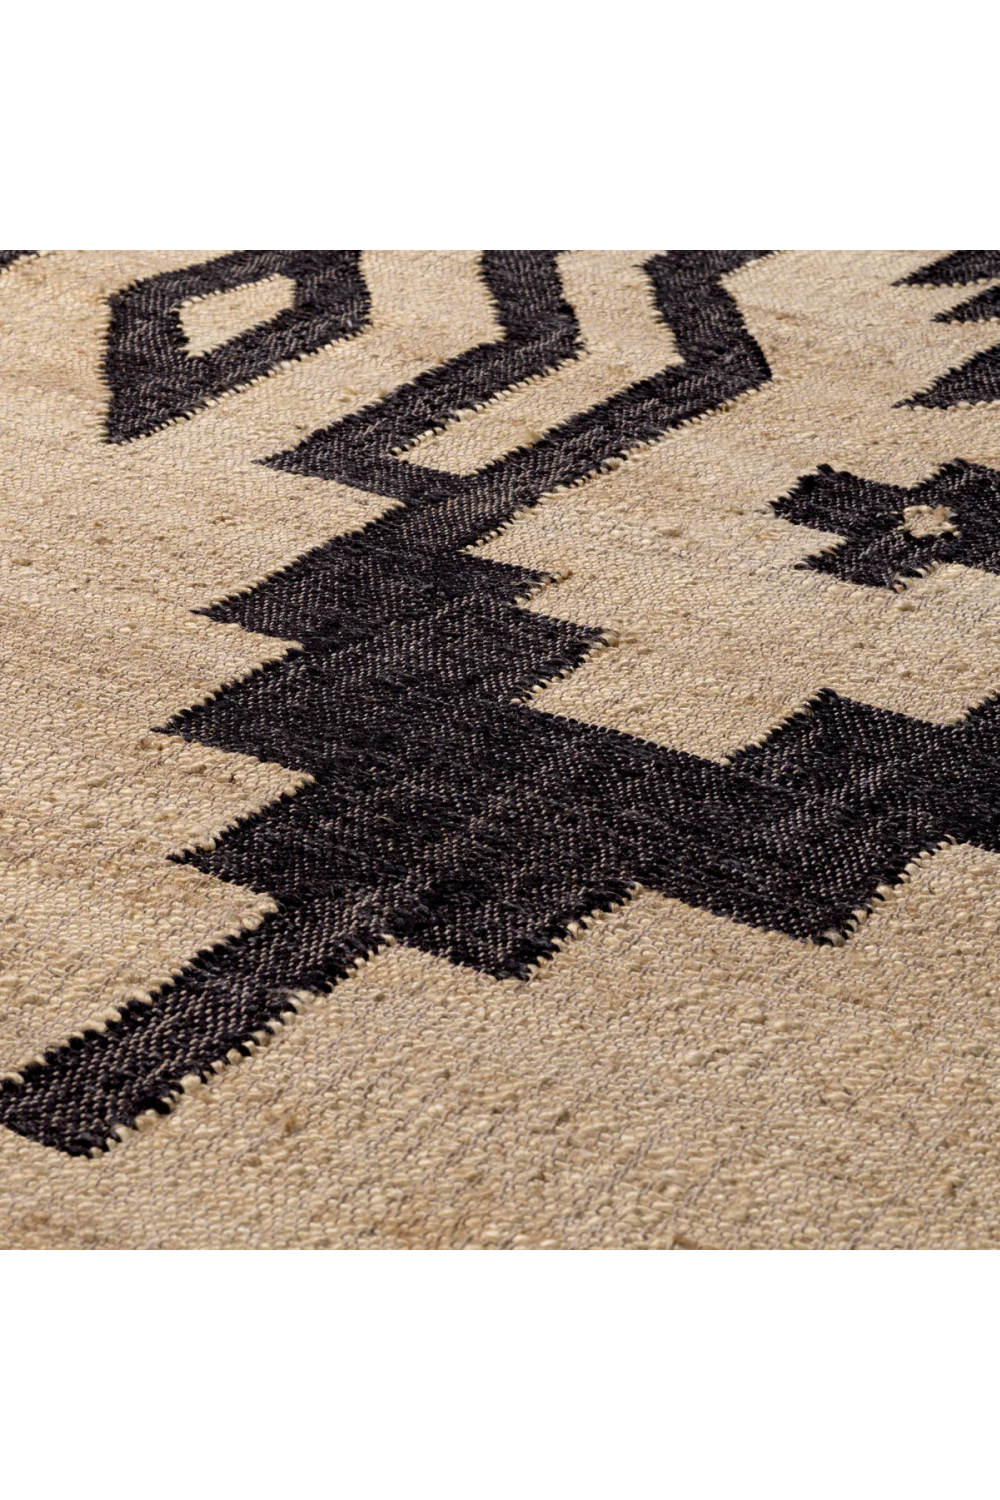 Natural Black Carpet 10' x 13' | Eichholtz Alhambra | Oroa.com